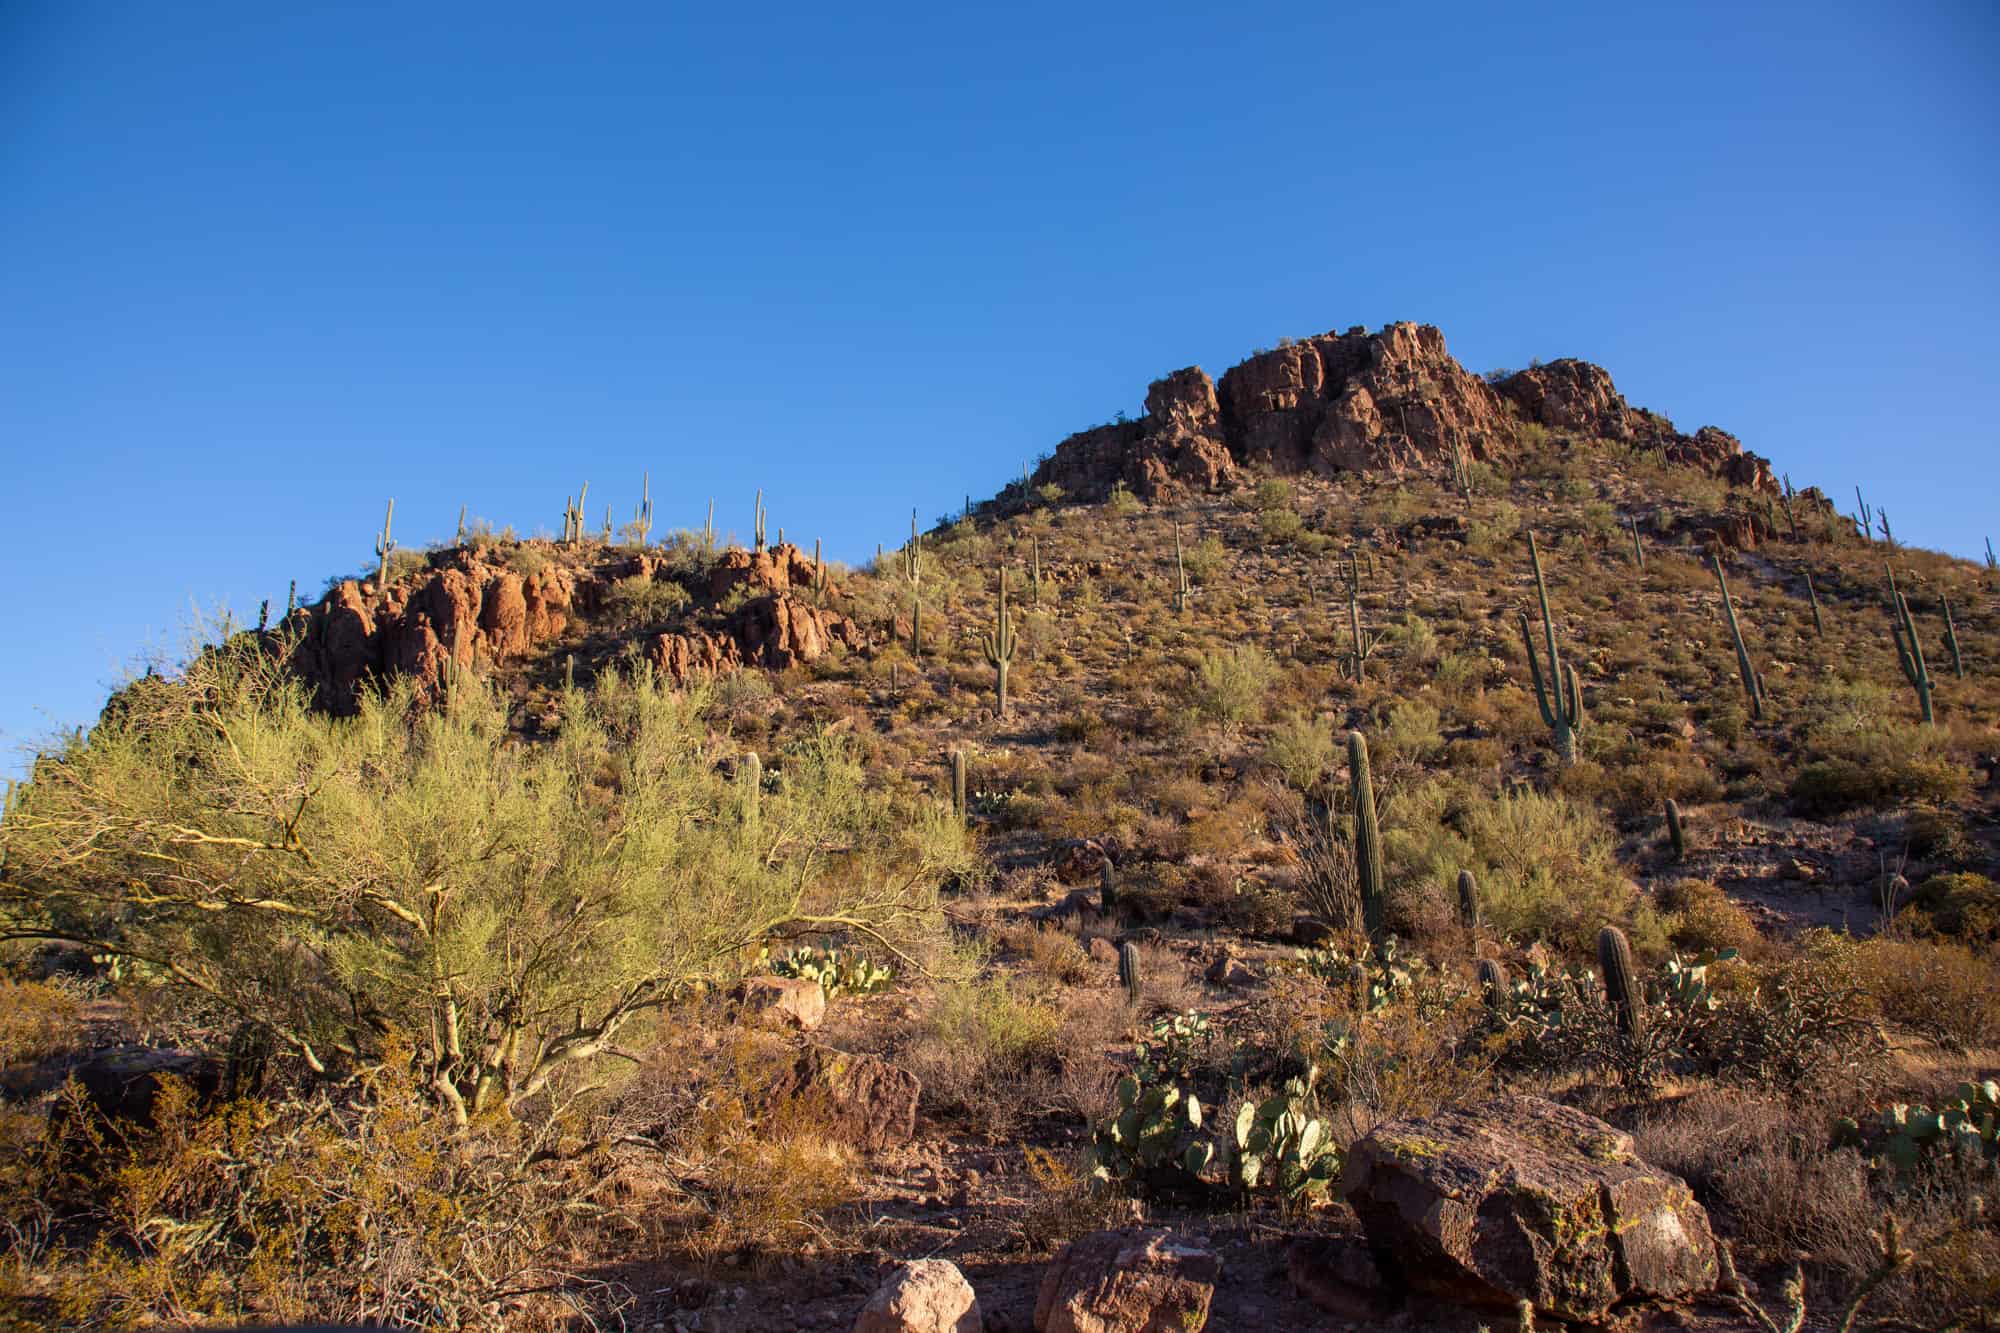 saguaro national park with saguaro cacti and a rocky mountain backdrop